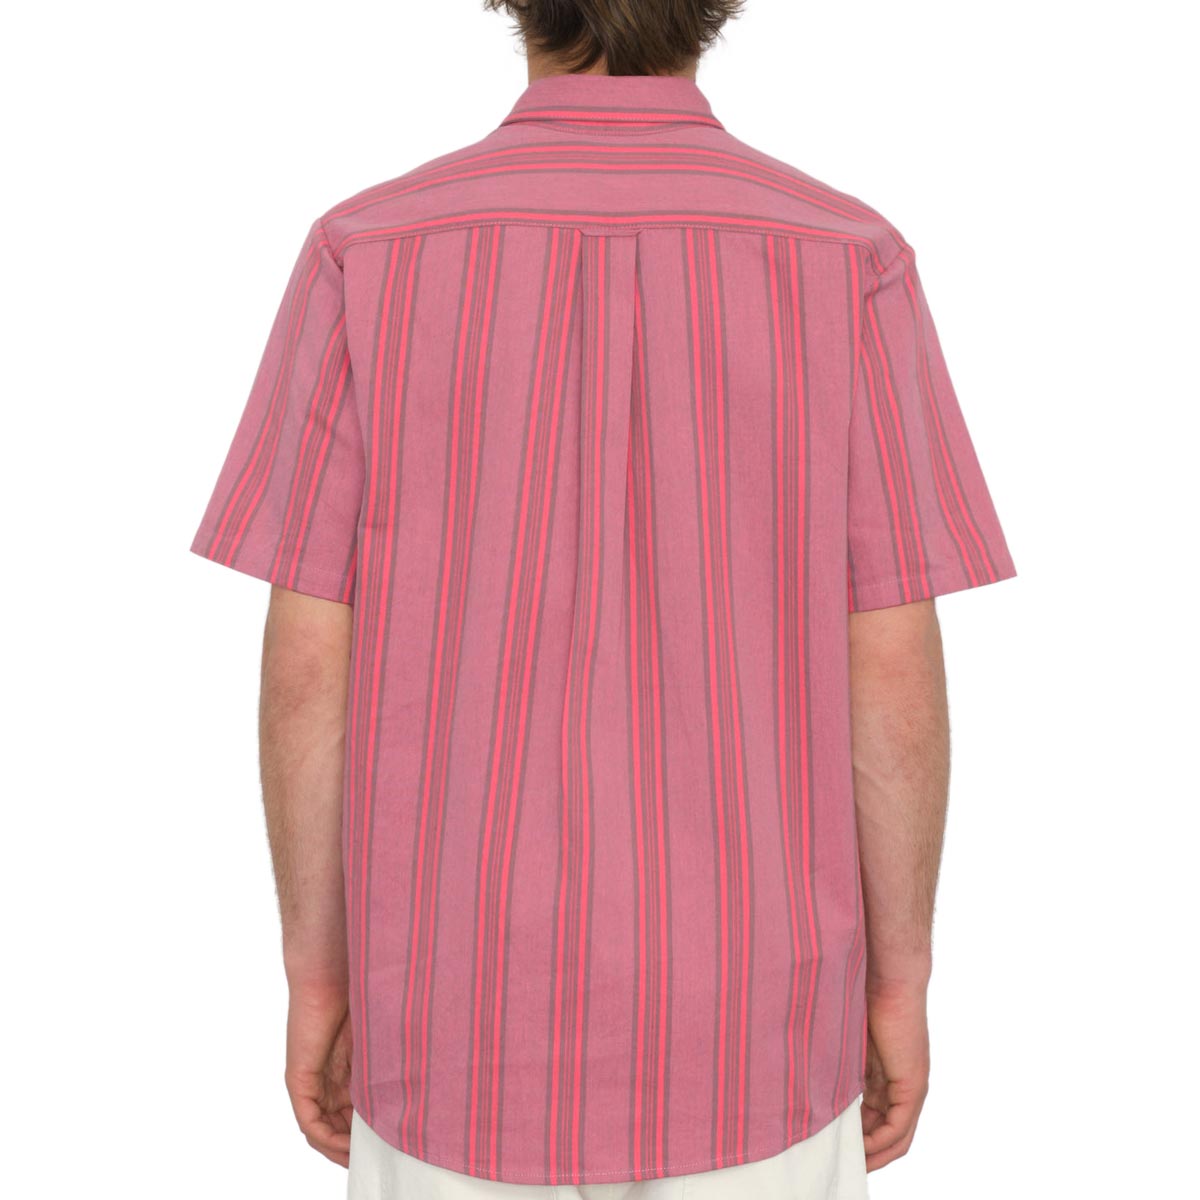 Volcom Newbar Stripe Shirt - Washed Ruby image 2